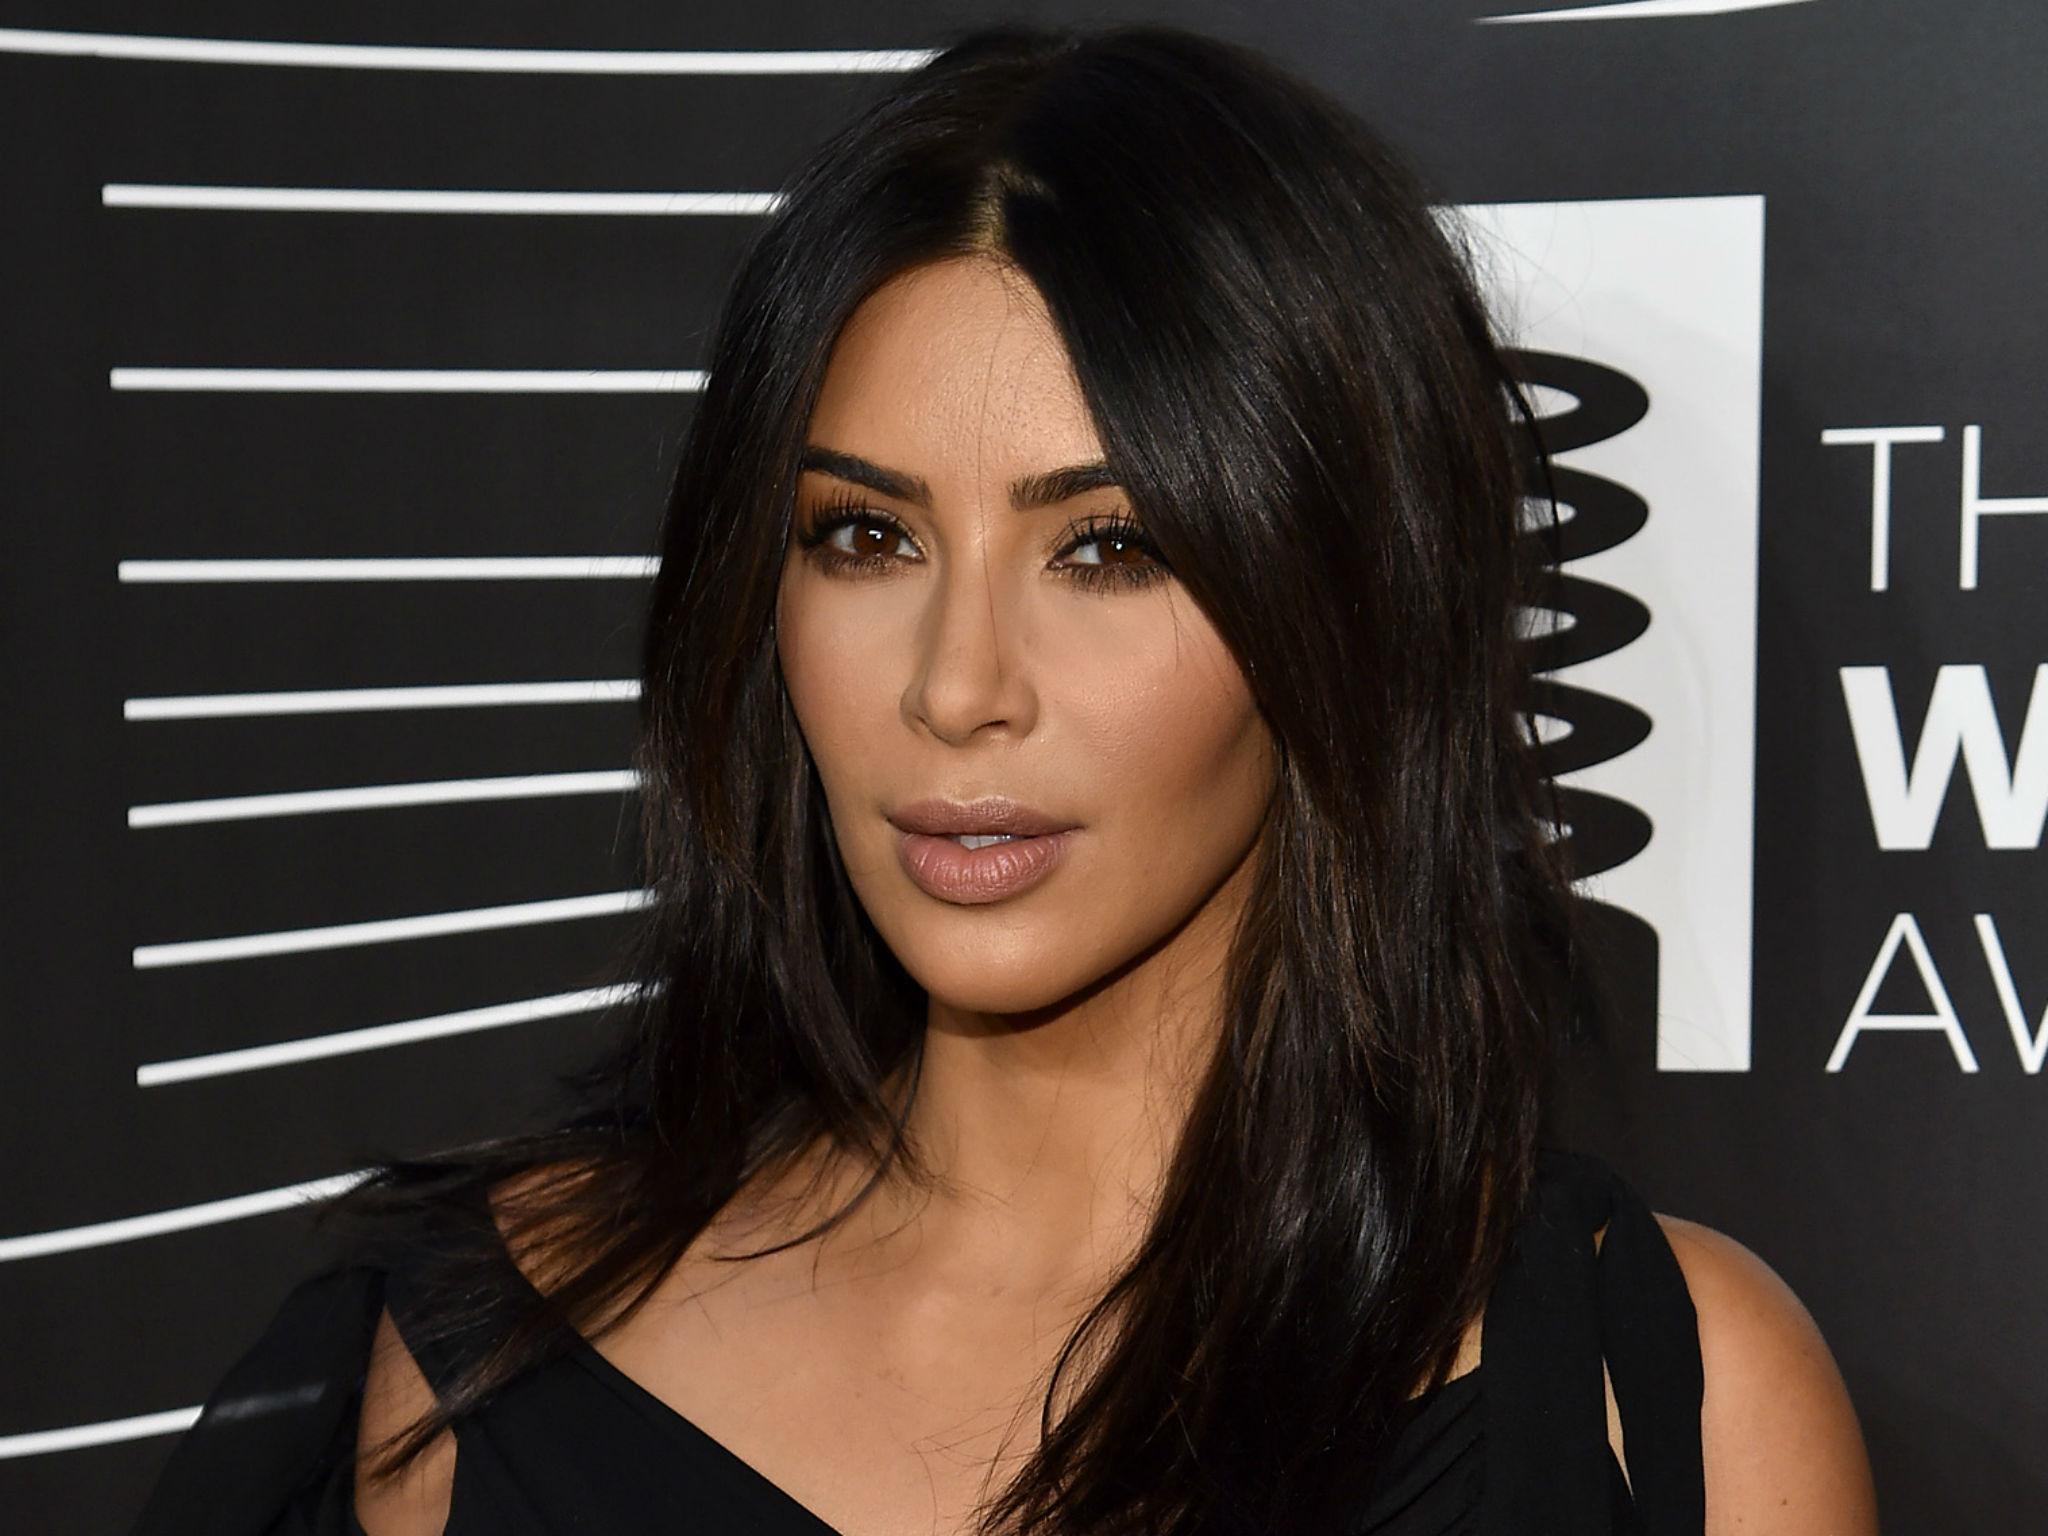 Kardashian-West prides herself on shutting down critics on social media